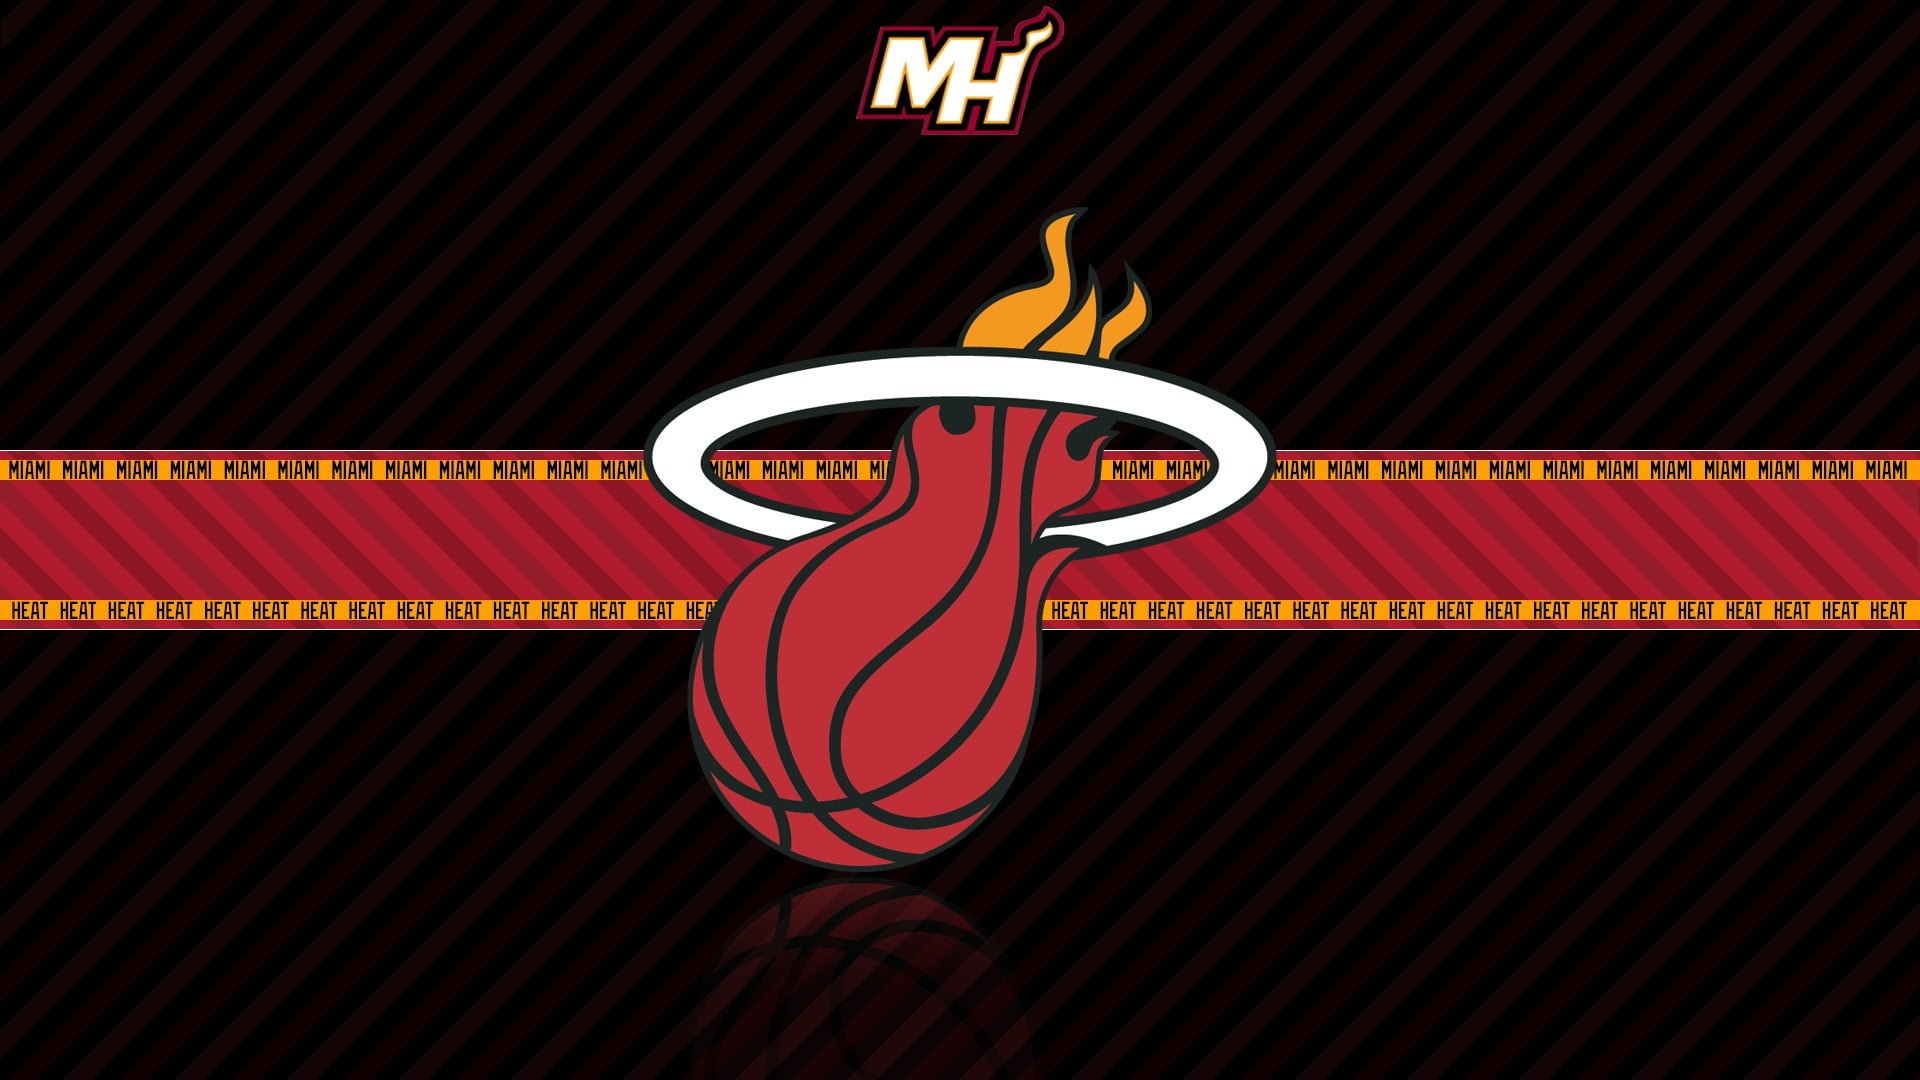 Miami Heat logo, NBA, basketball wallpaper, sports, red, no people, low angle view